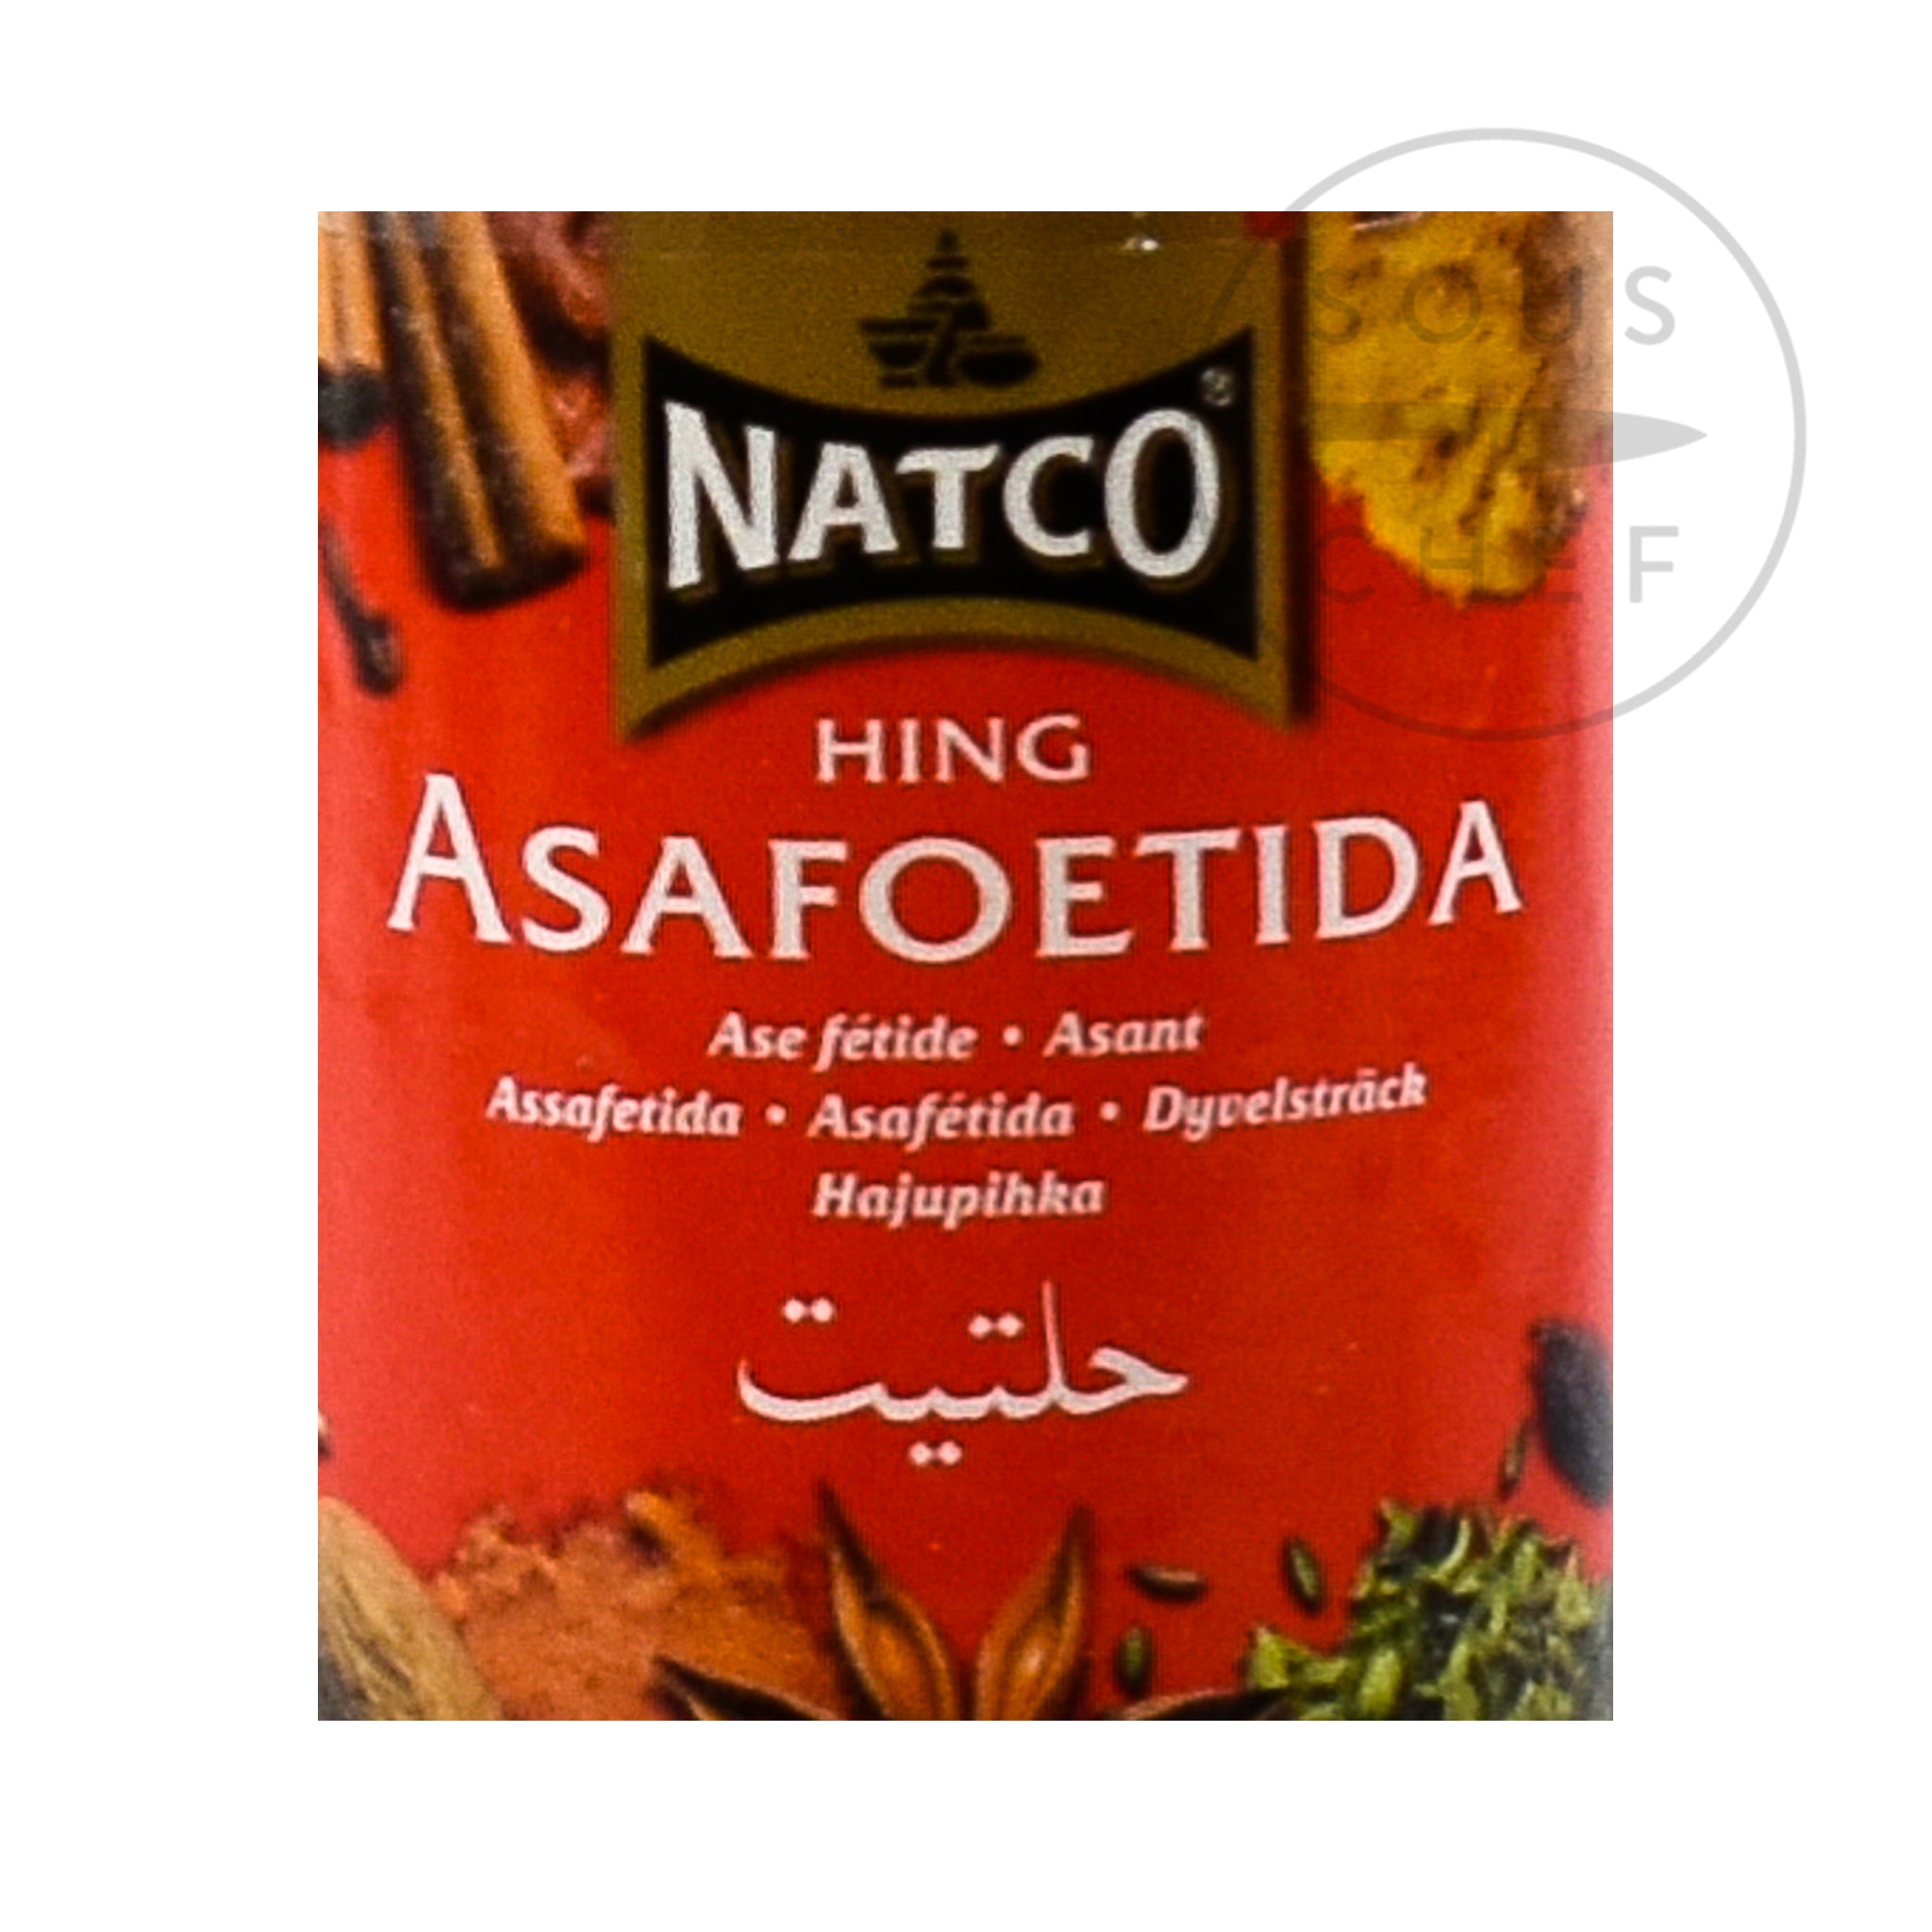 Natco Asafoetida, 100g